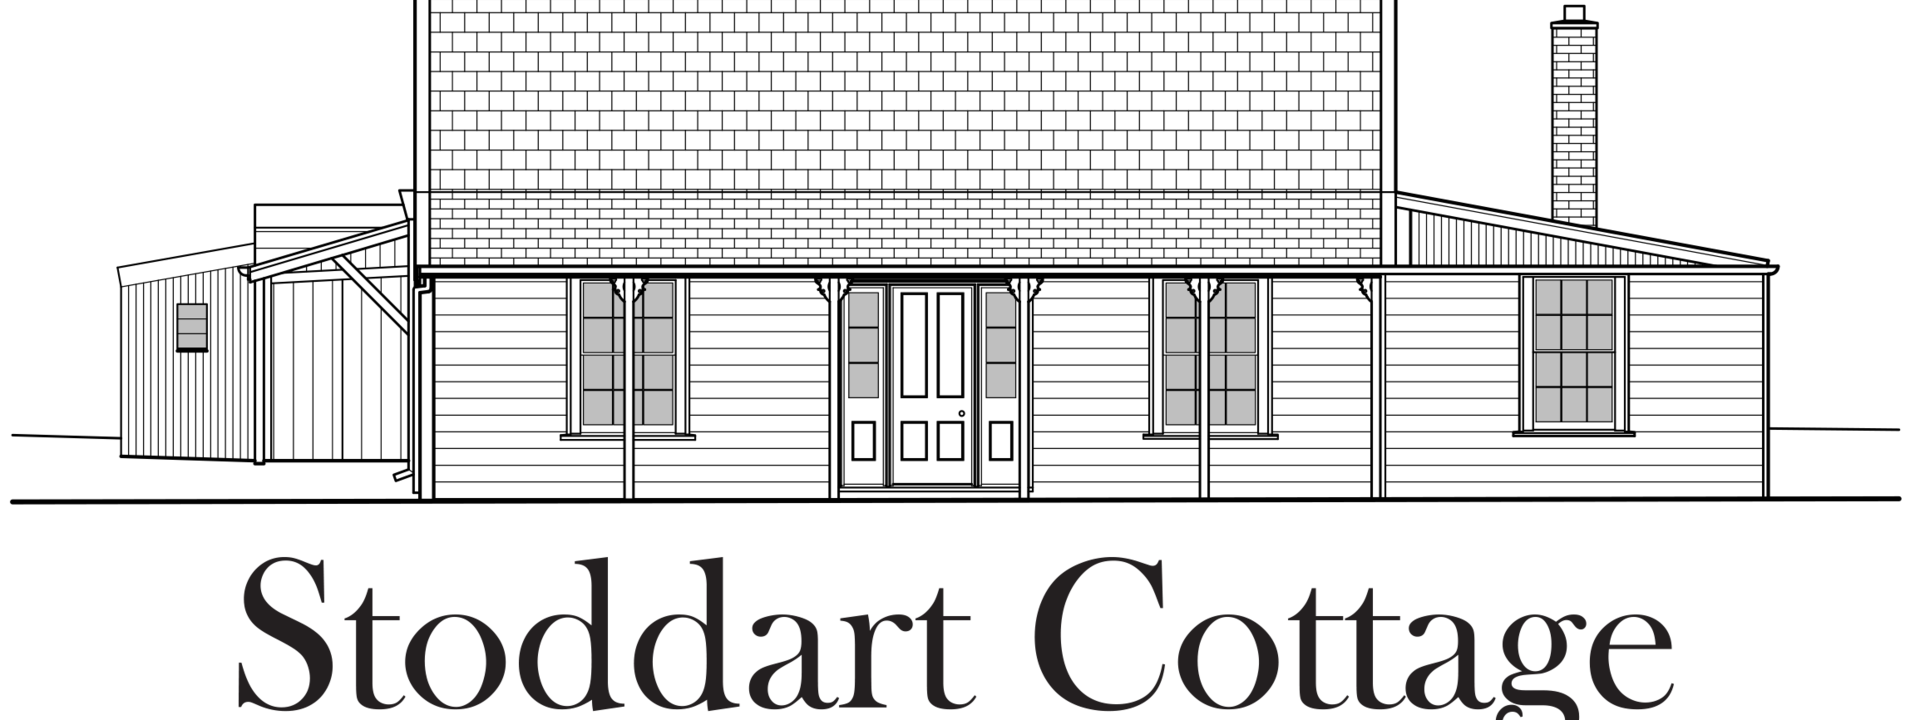 Logo: Stoddart Cottage Gallery